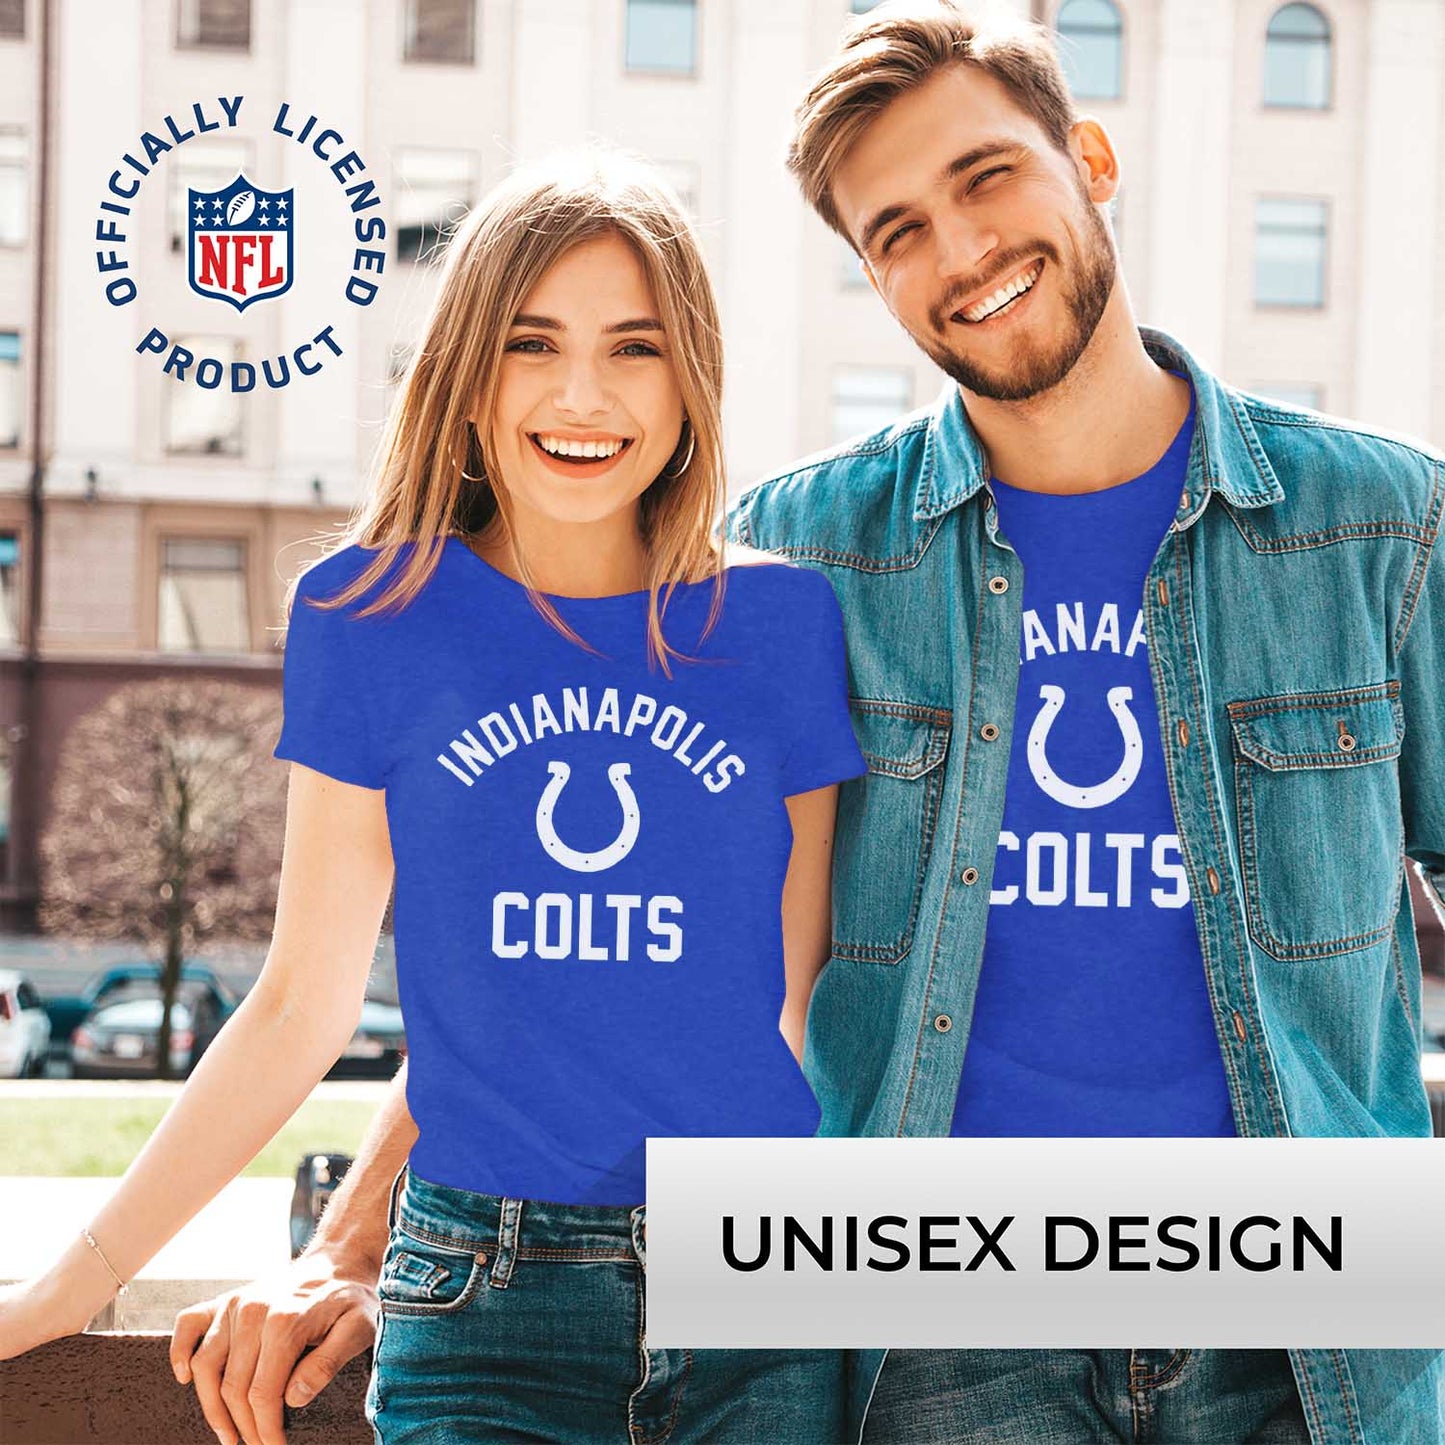 Indianapolis Colts NFL Adult Gameday T-Shirt - Royal